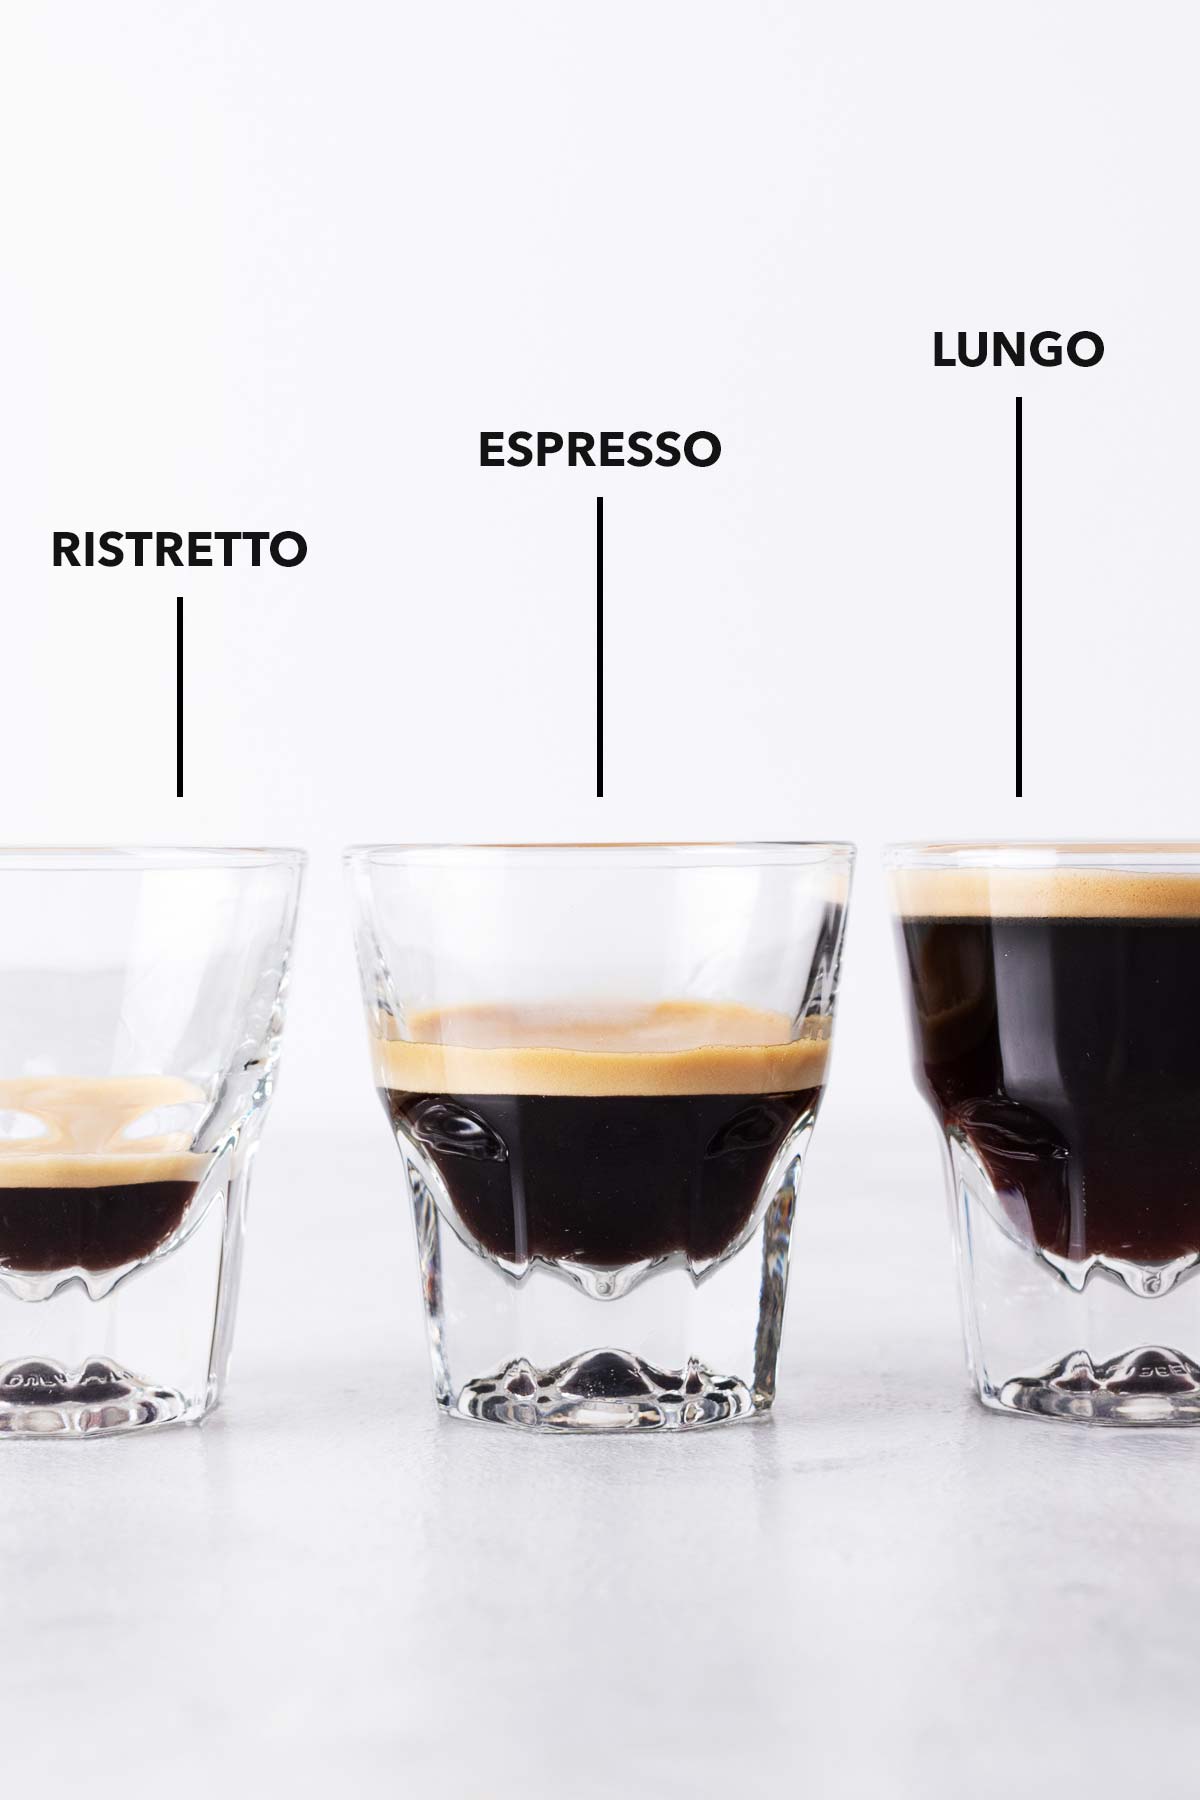 Gelabelde espressokopjes met ristretto, espresso en lungo.